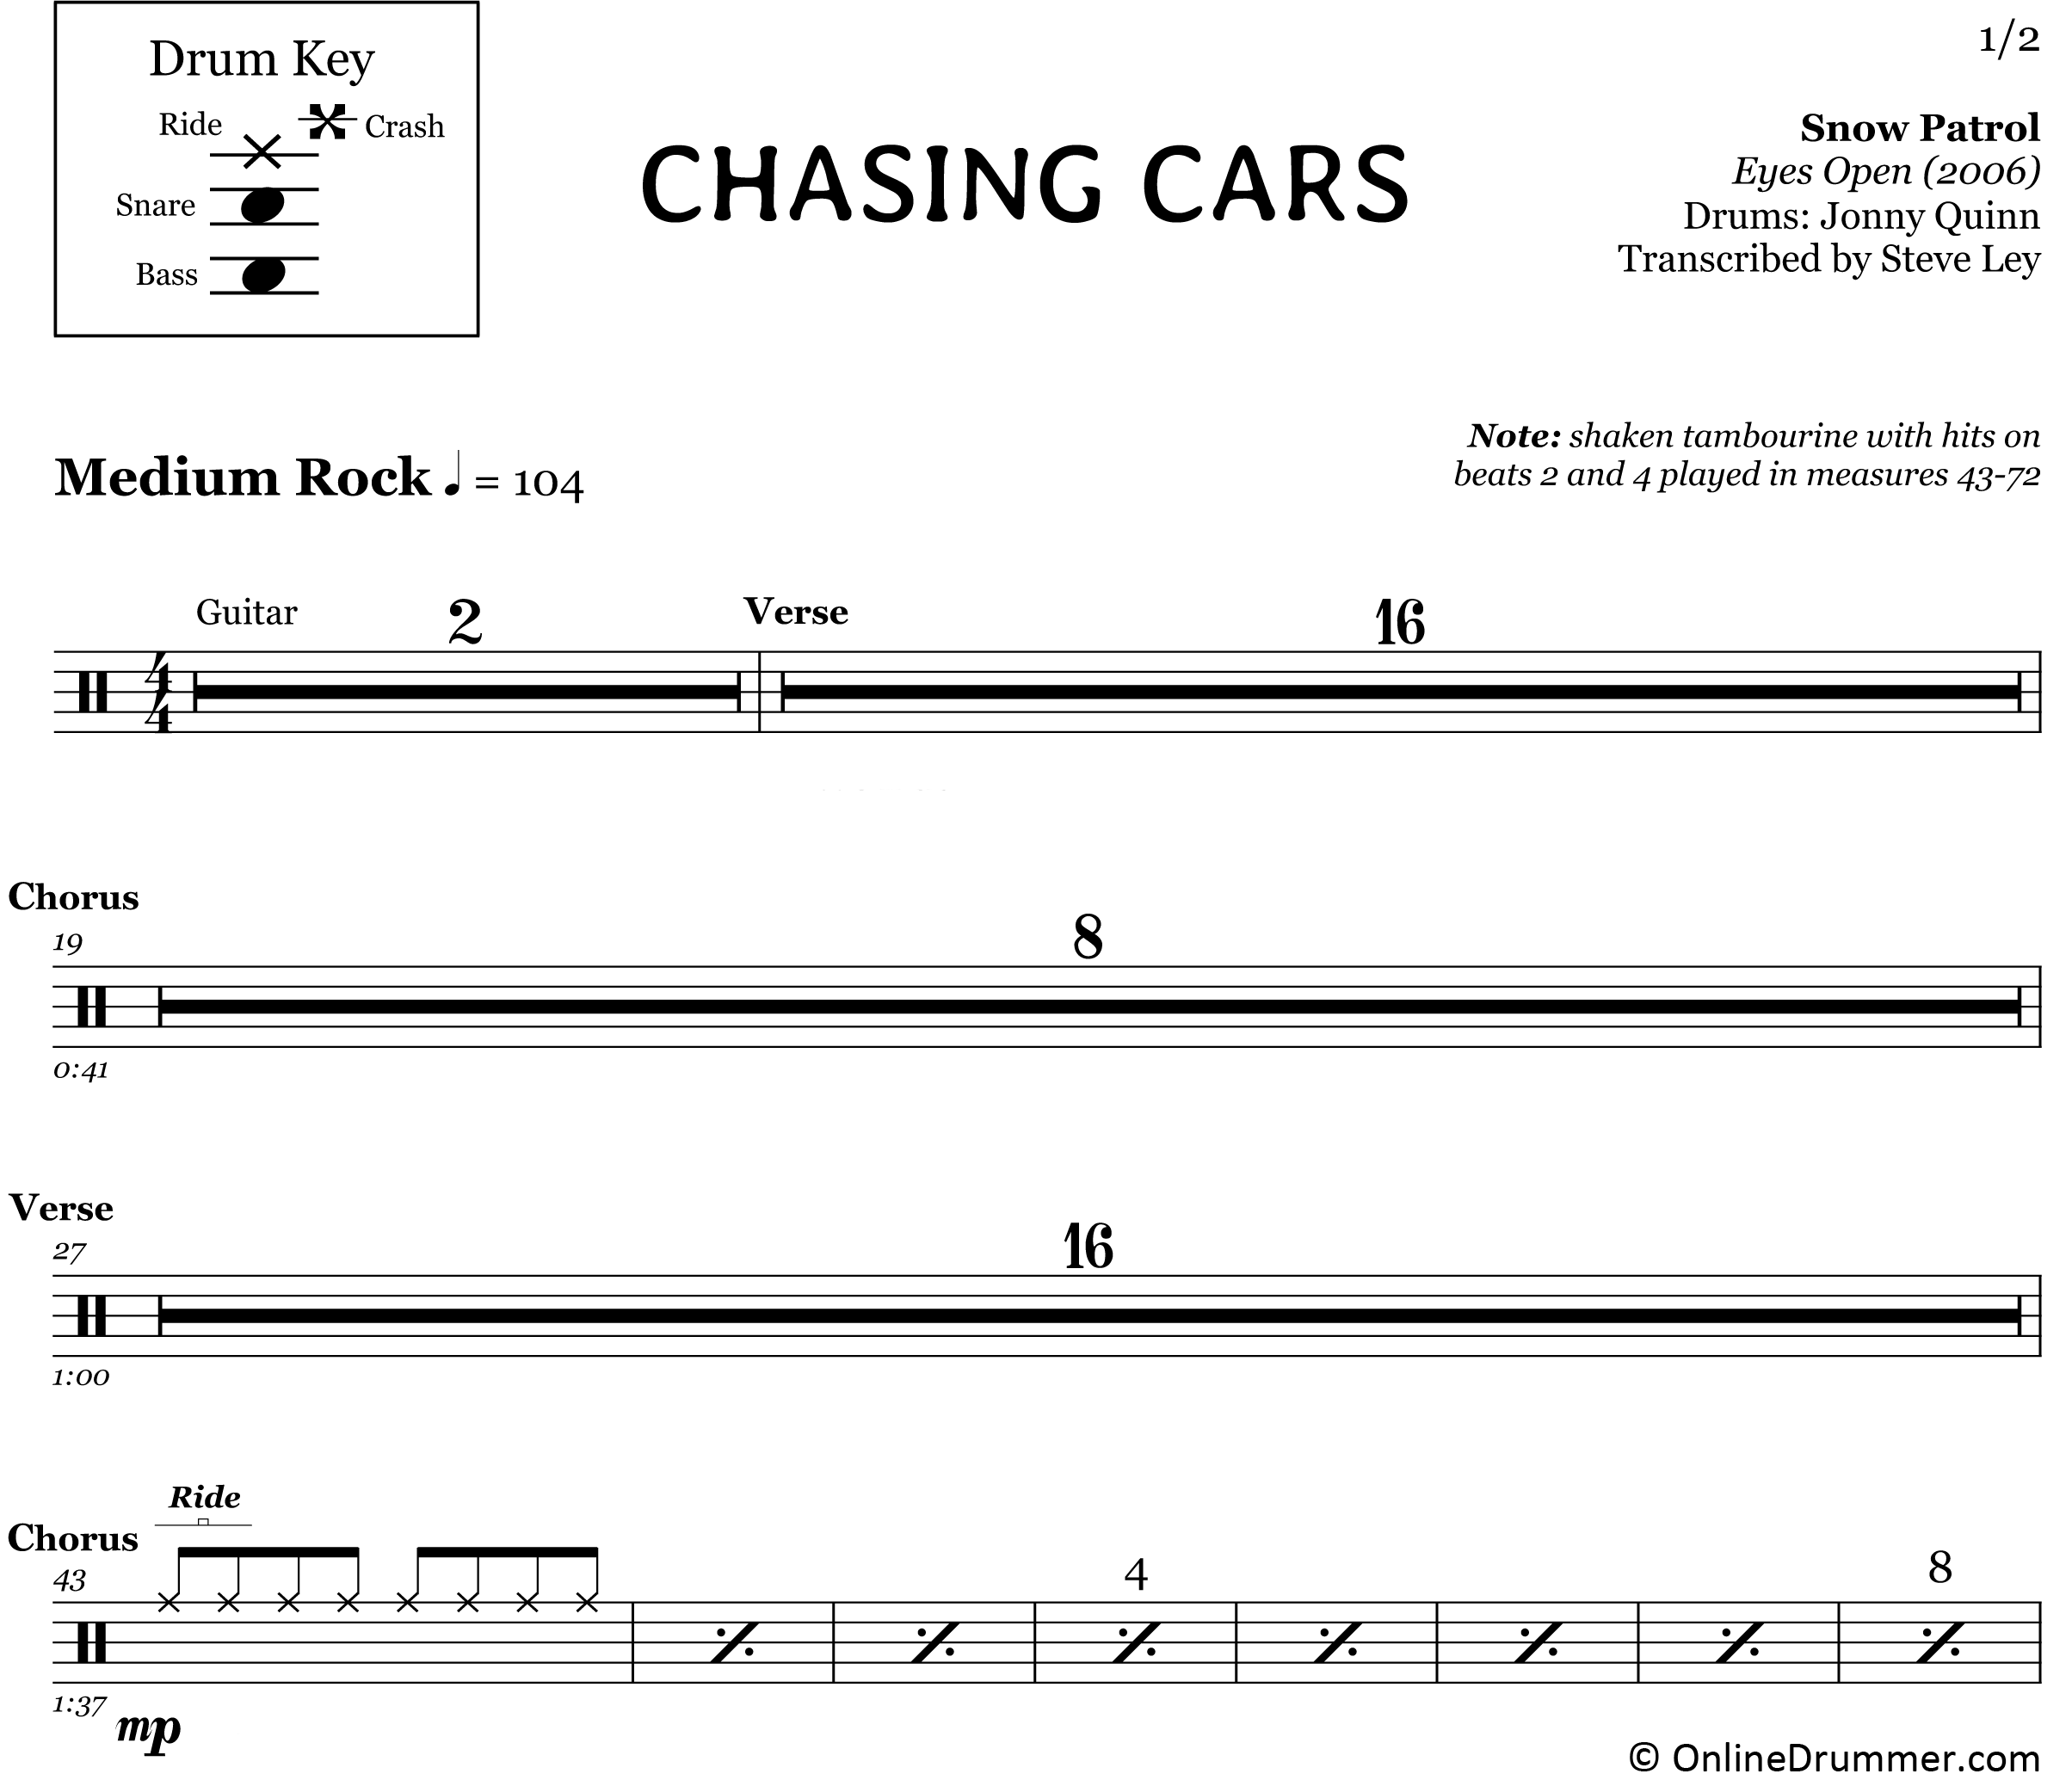 Chasing Cars – Snow Patrol (U)